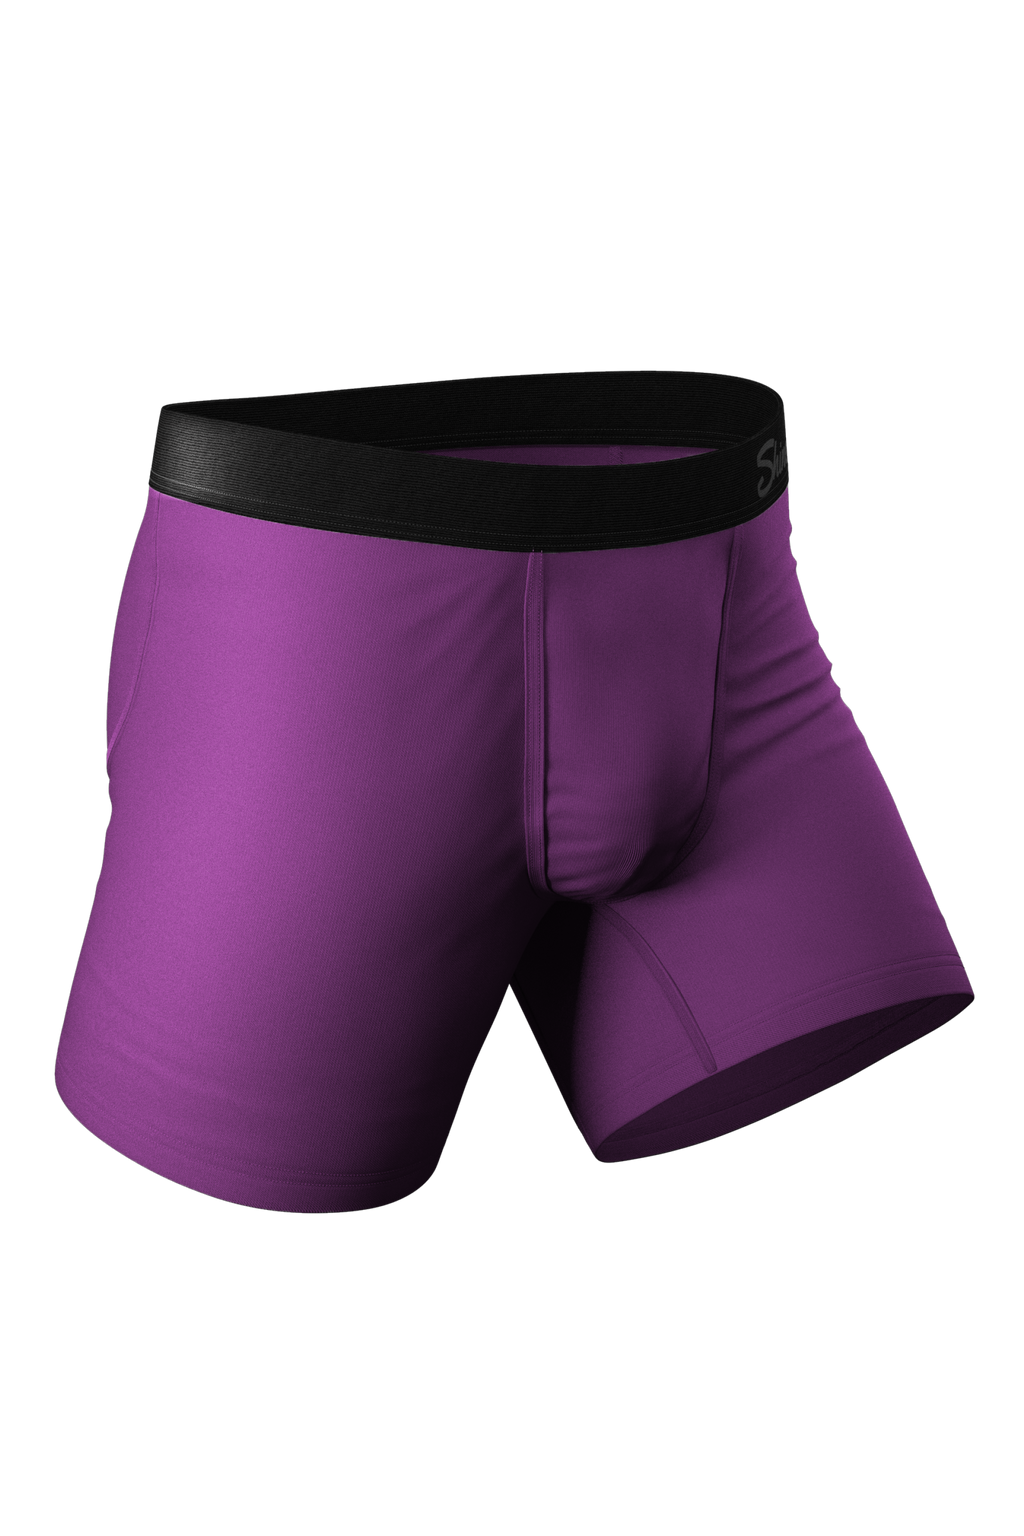 purple men's boxers